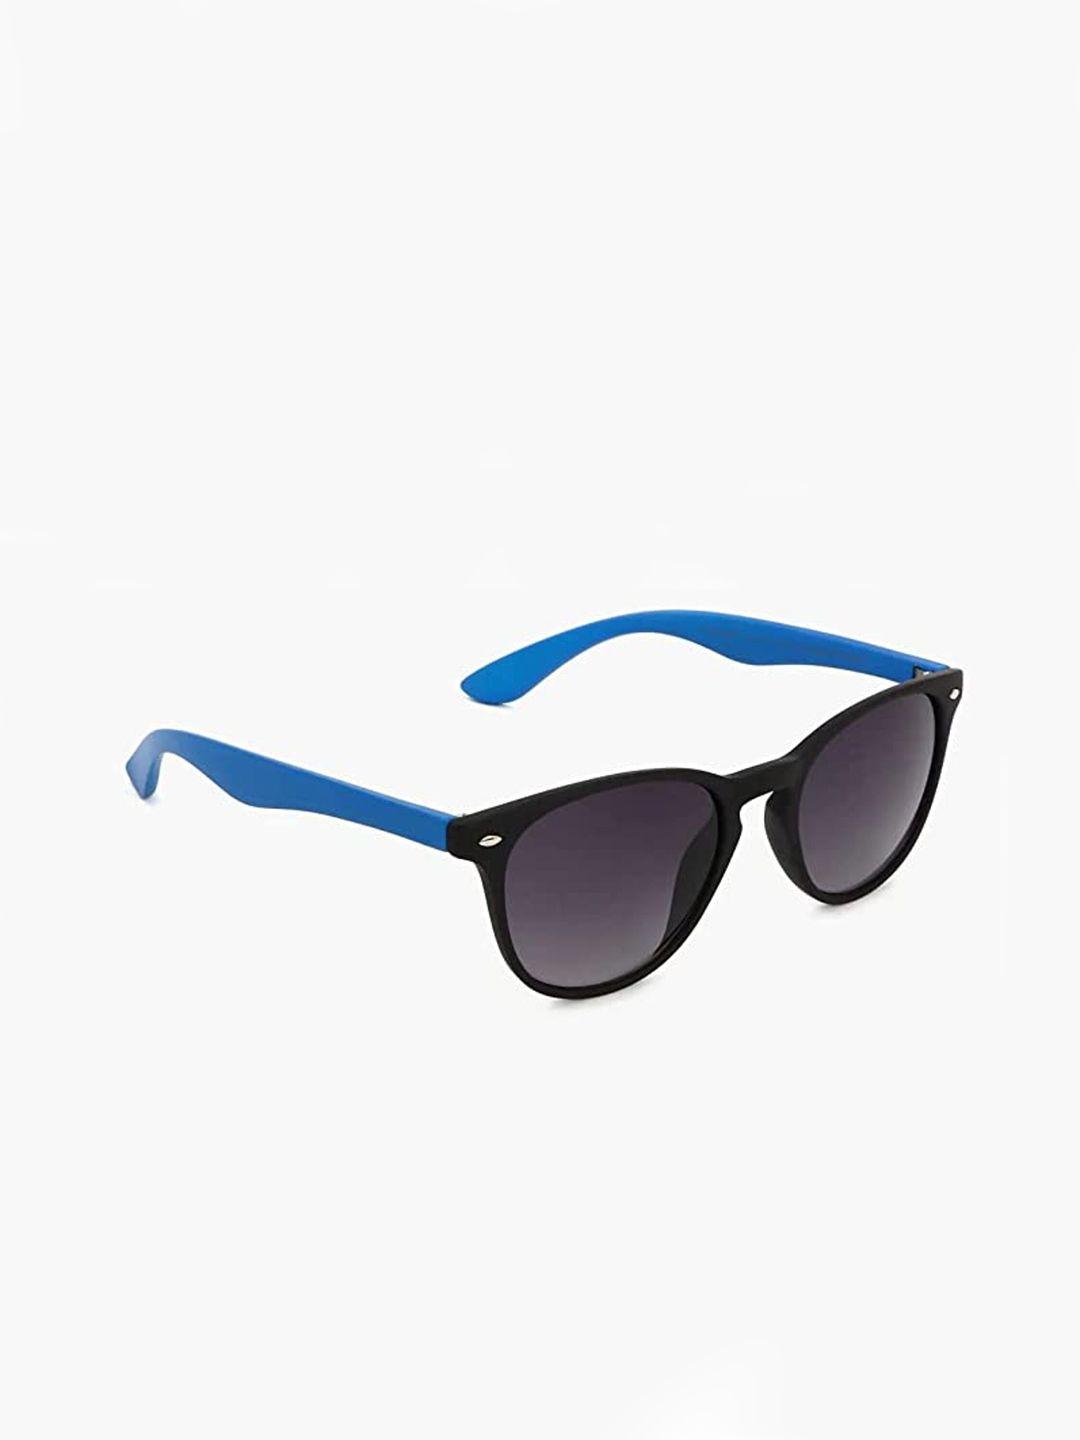 roadies wayfarer sunglasses with uv protected lens rd-113-c6n